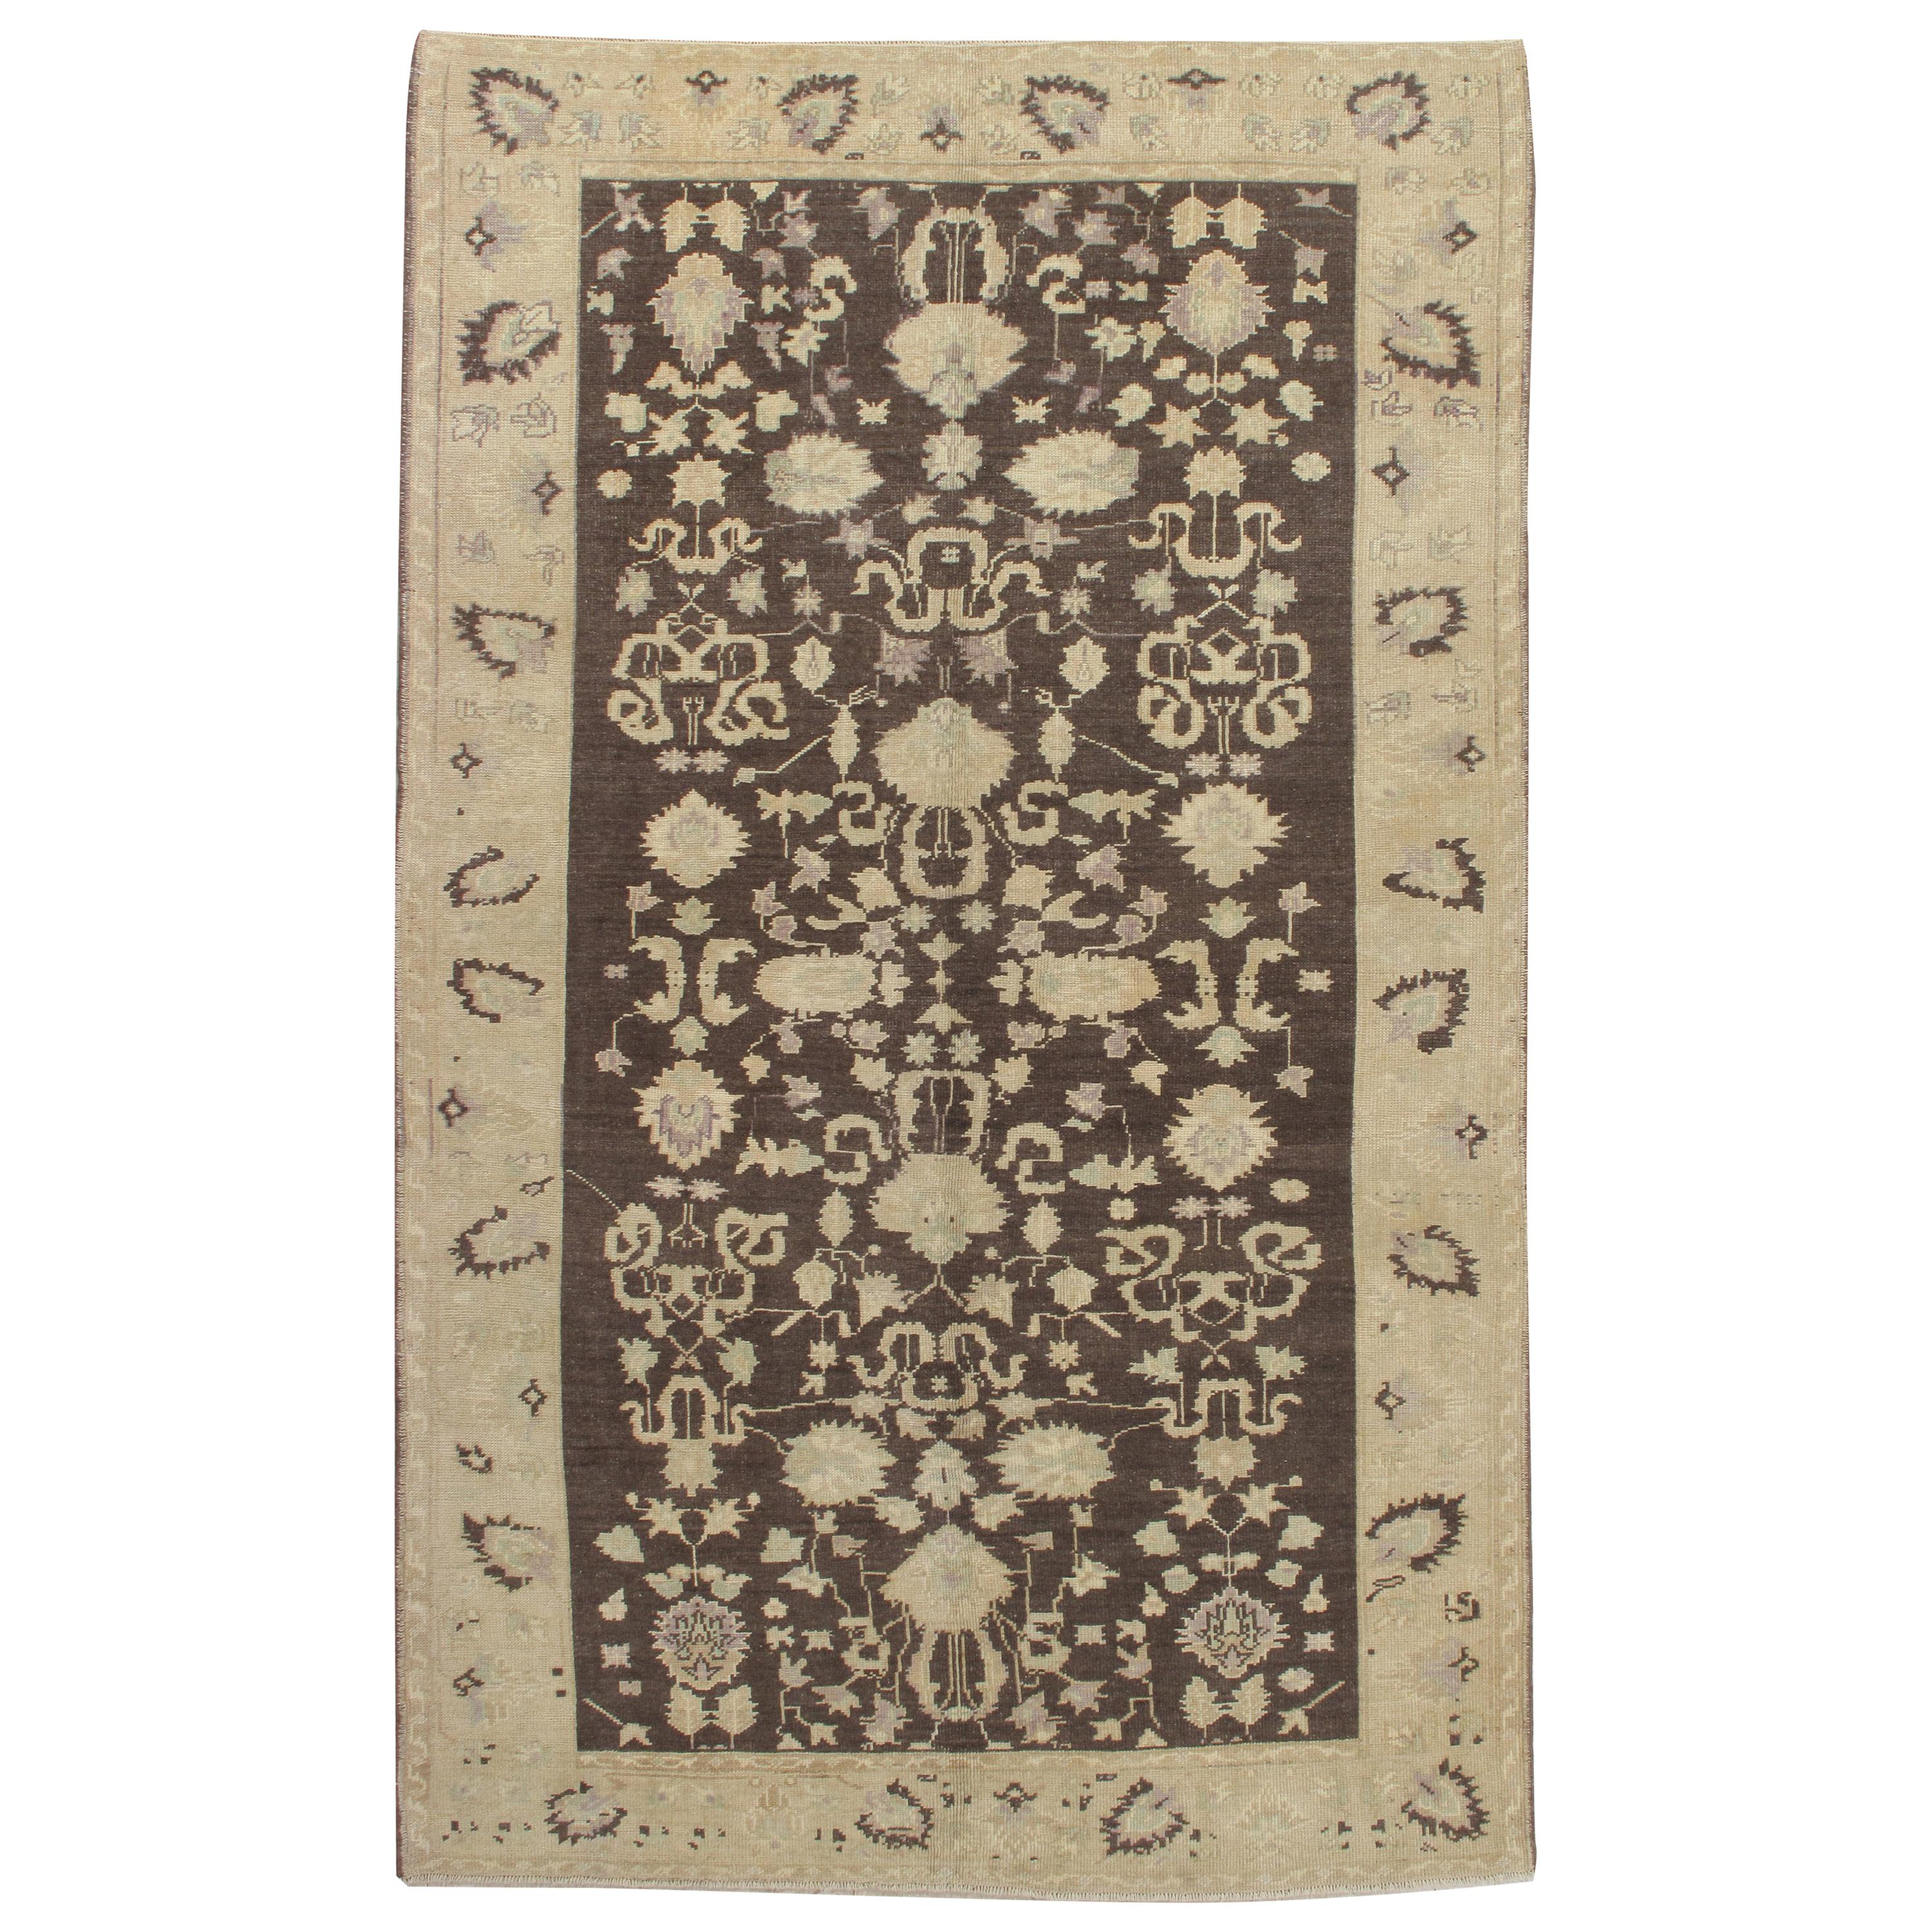 Antique Oushak Carpet, Handmade Turkish Oriental Rug, Beige, Taupe, Charcoal For Sale